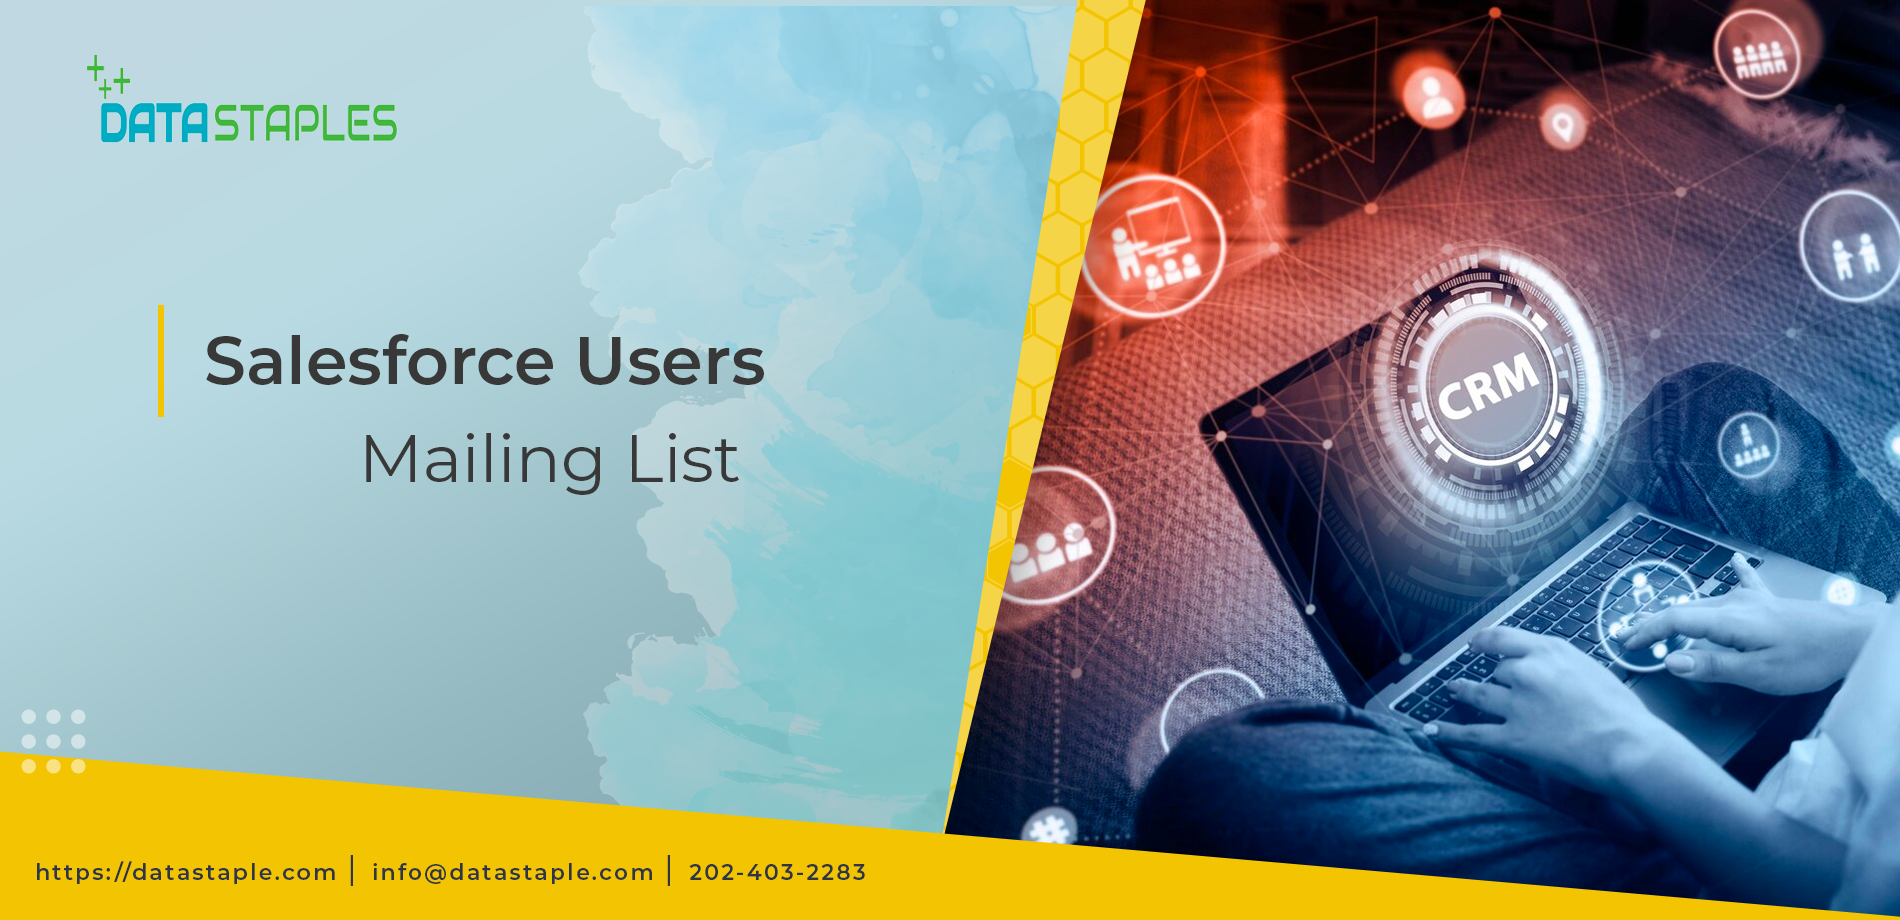 Salesforce Users Mailing List | DataStaples